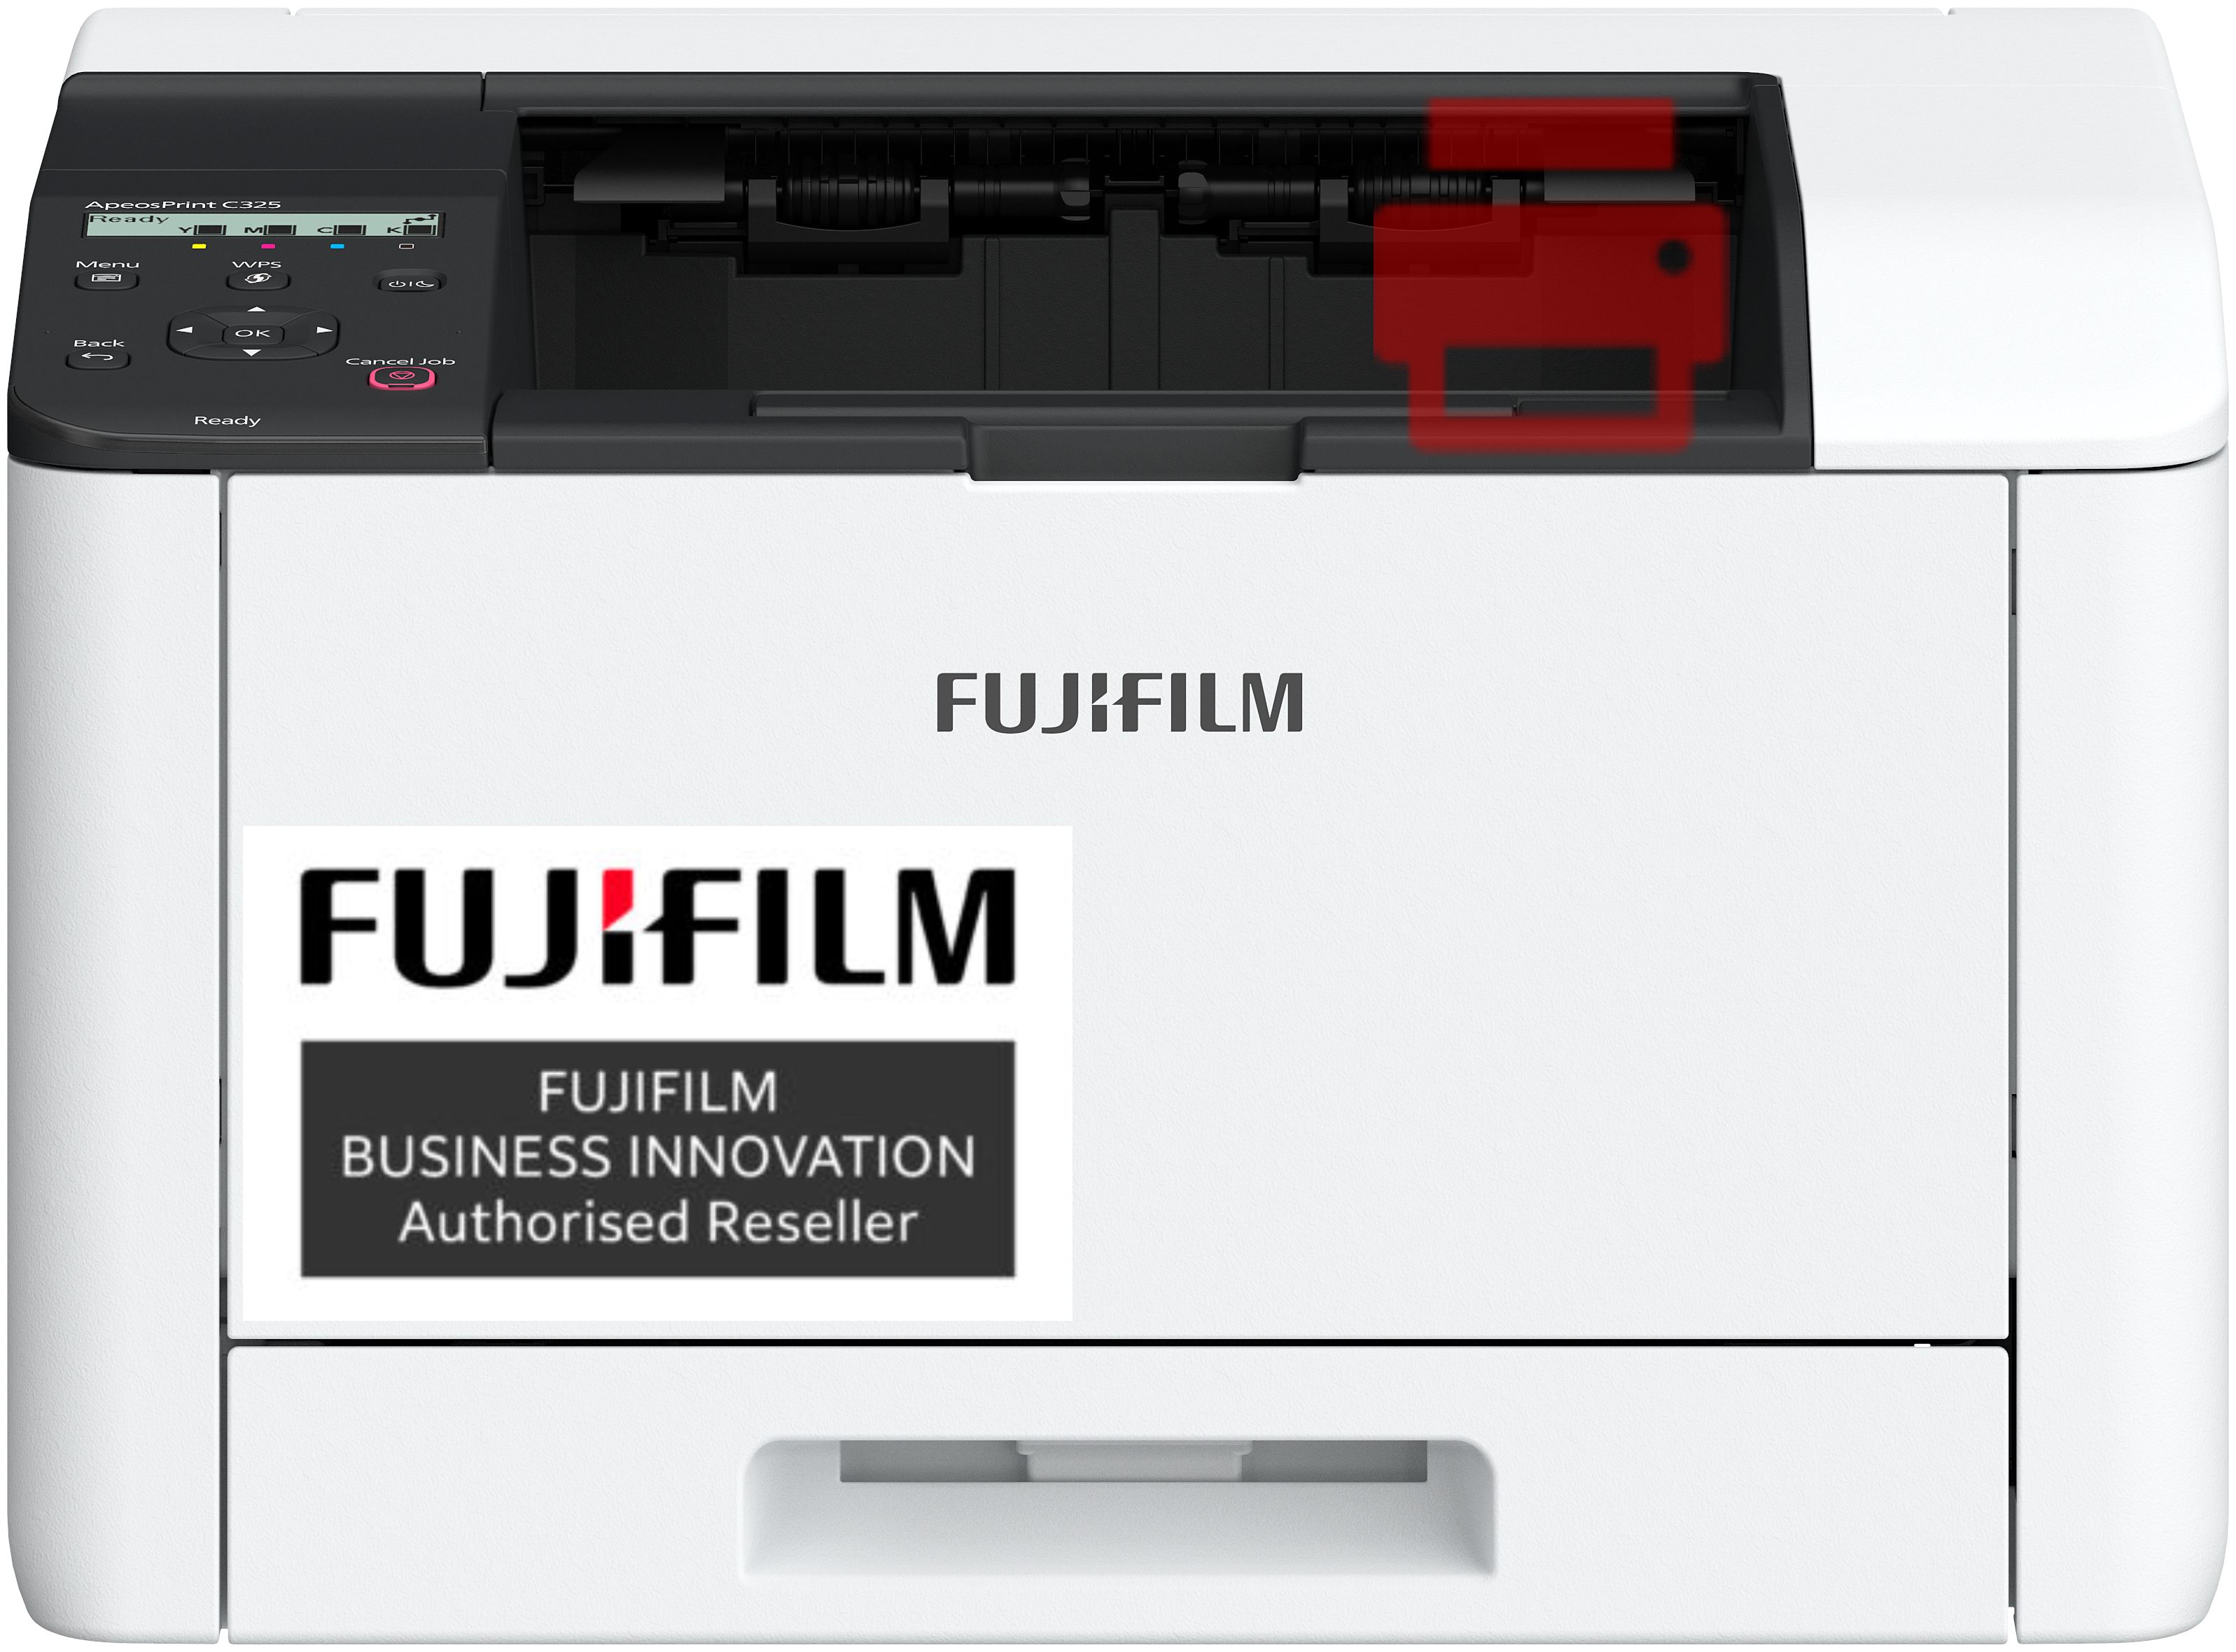 FUJIFILM ApeosPrint C325dw A4 Colour Laser Printer (Special Promotional Price)